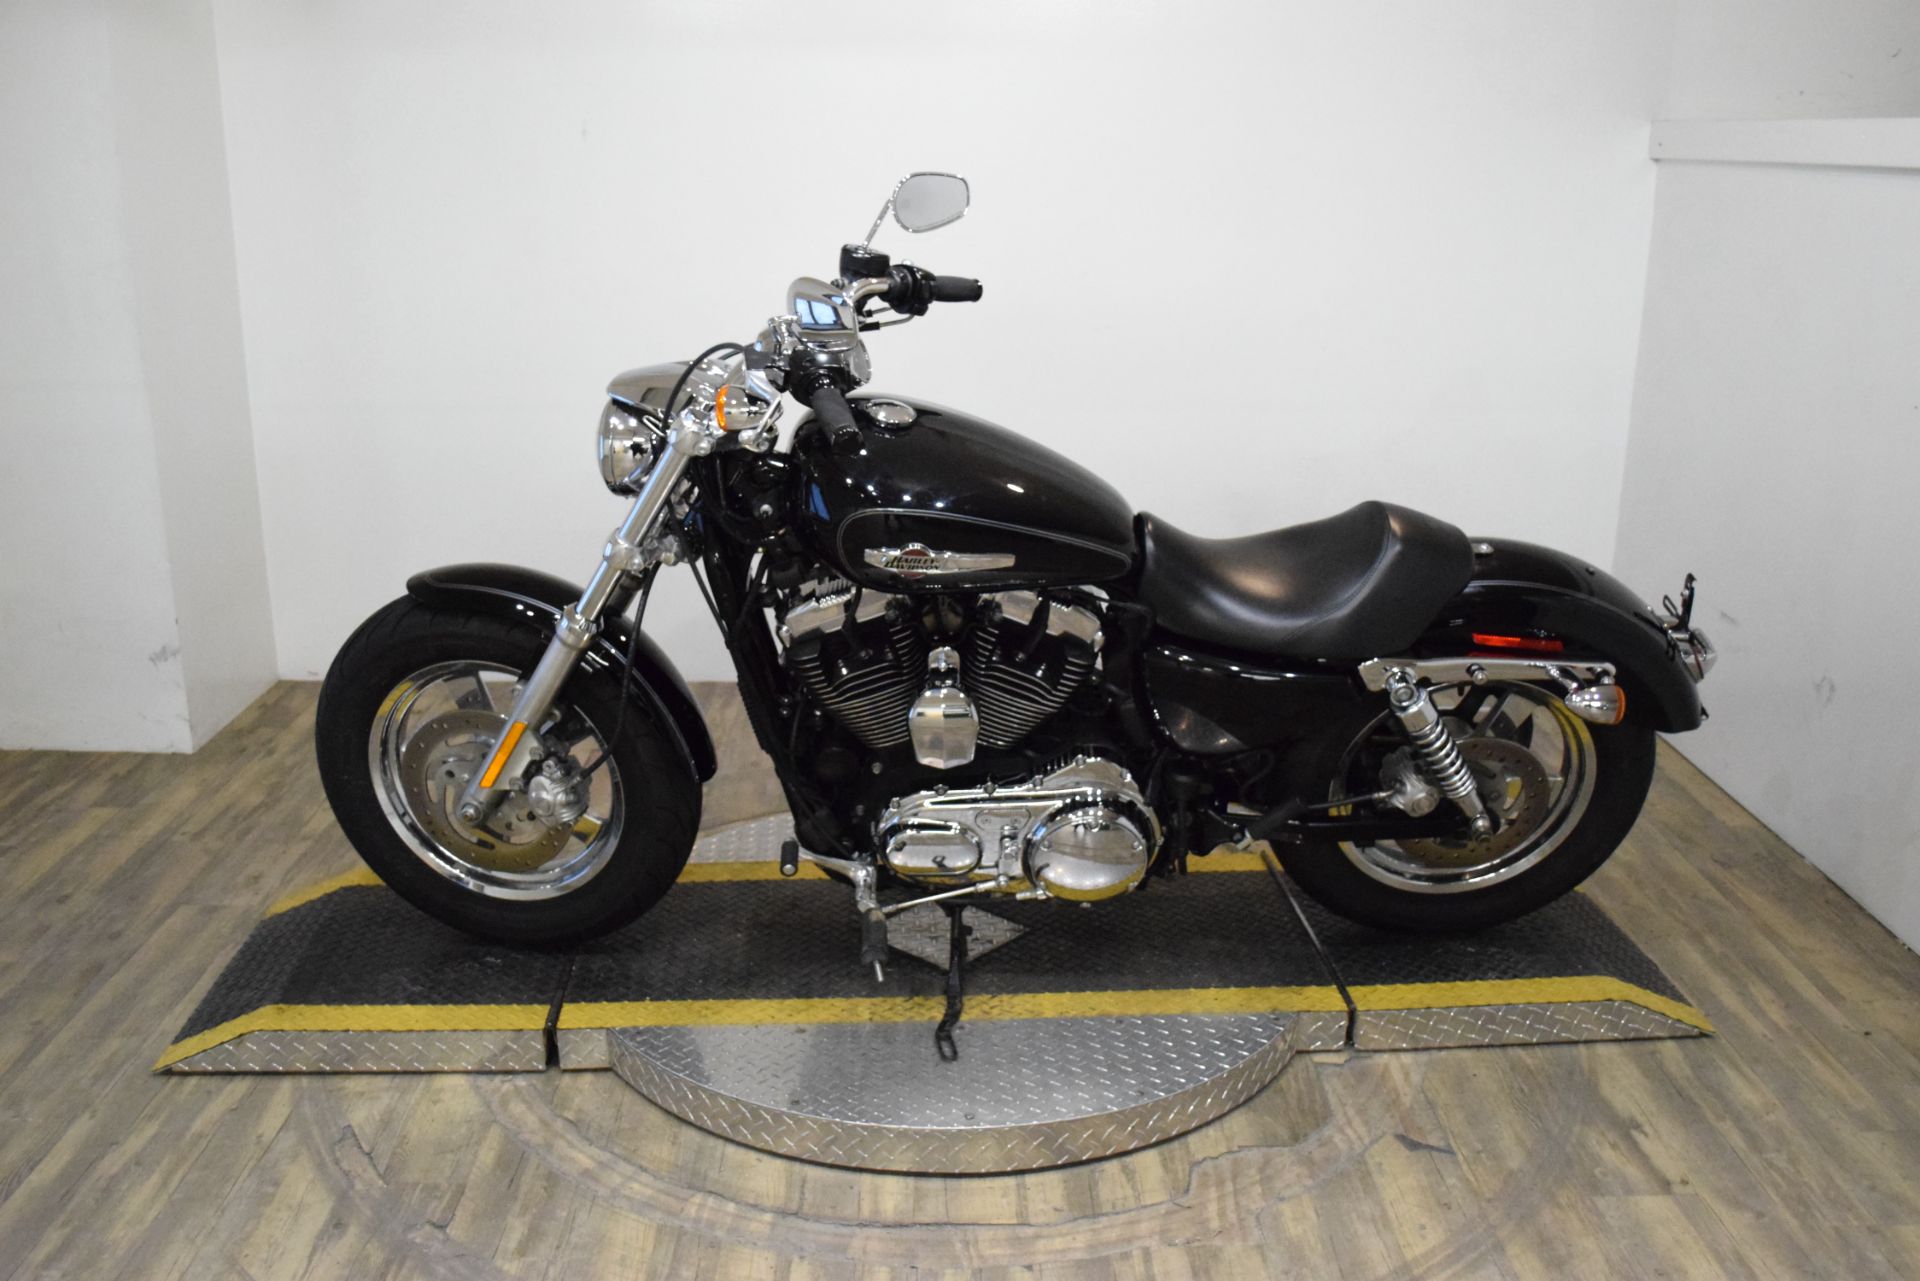 2013 Harley-Davidson Sportster® 1200 Custom in Wauconda, Illinois - Photo 15